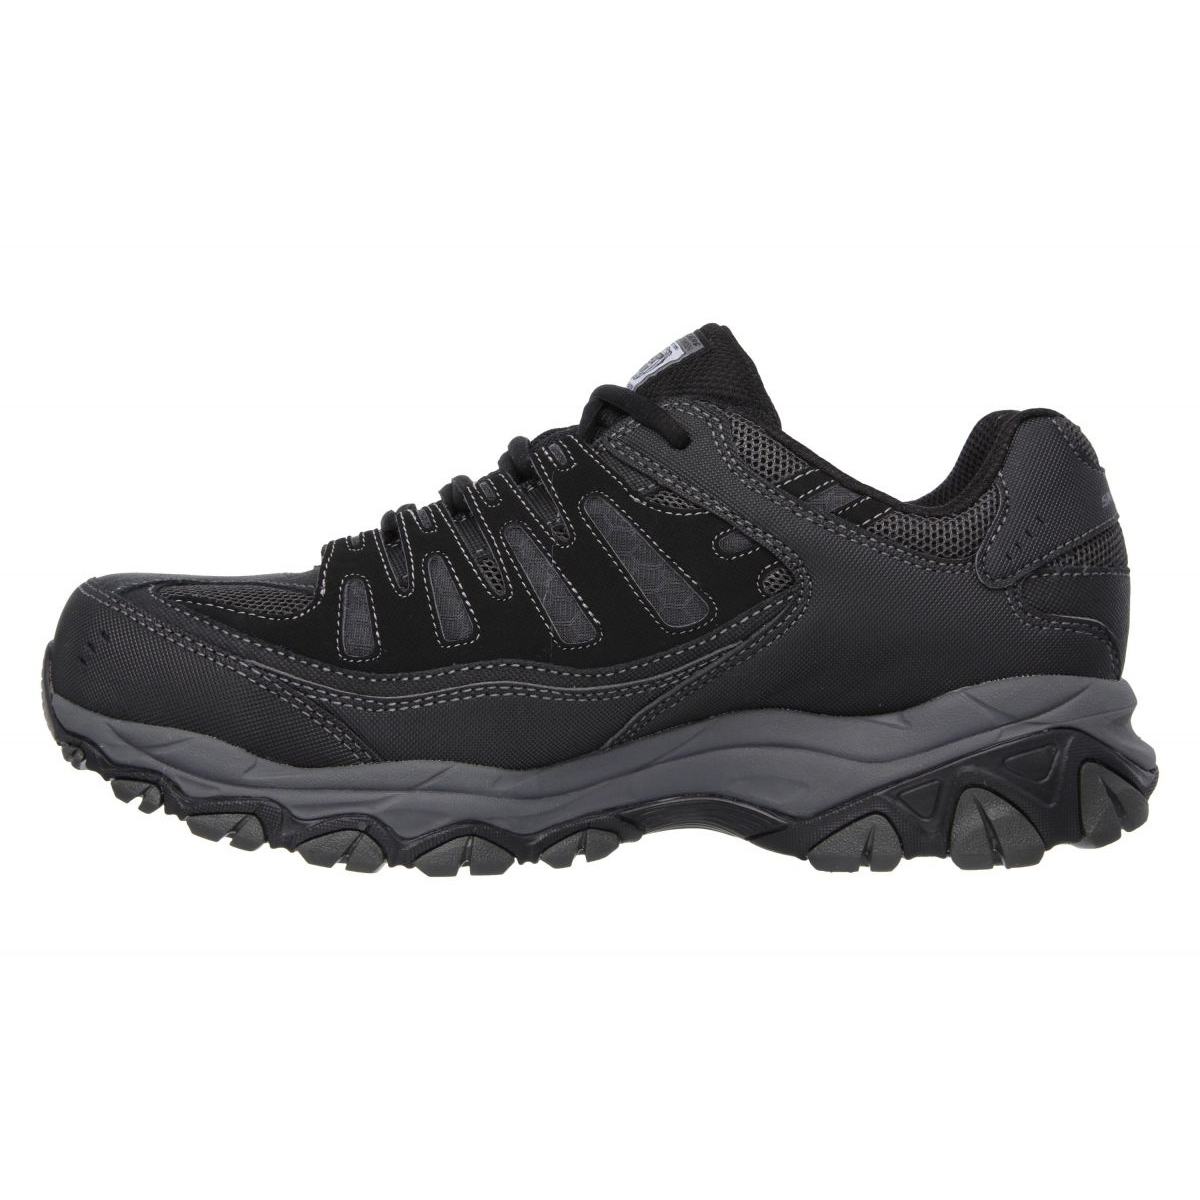 Skechers Men's Cankton-U Industrial Shoe 7 BLACK/CHARCOAL - BLACK/CHARCOAL, 10.5 Wide